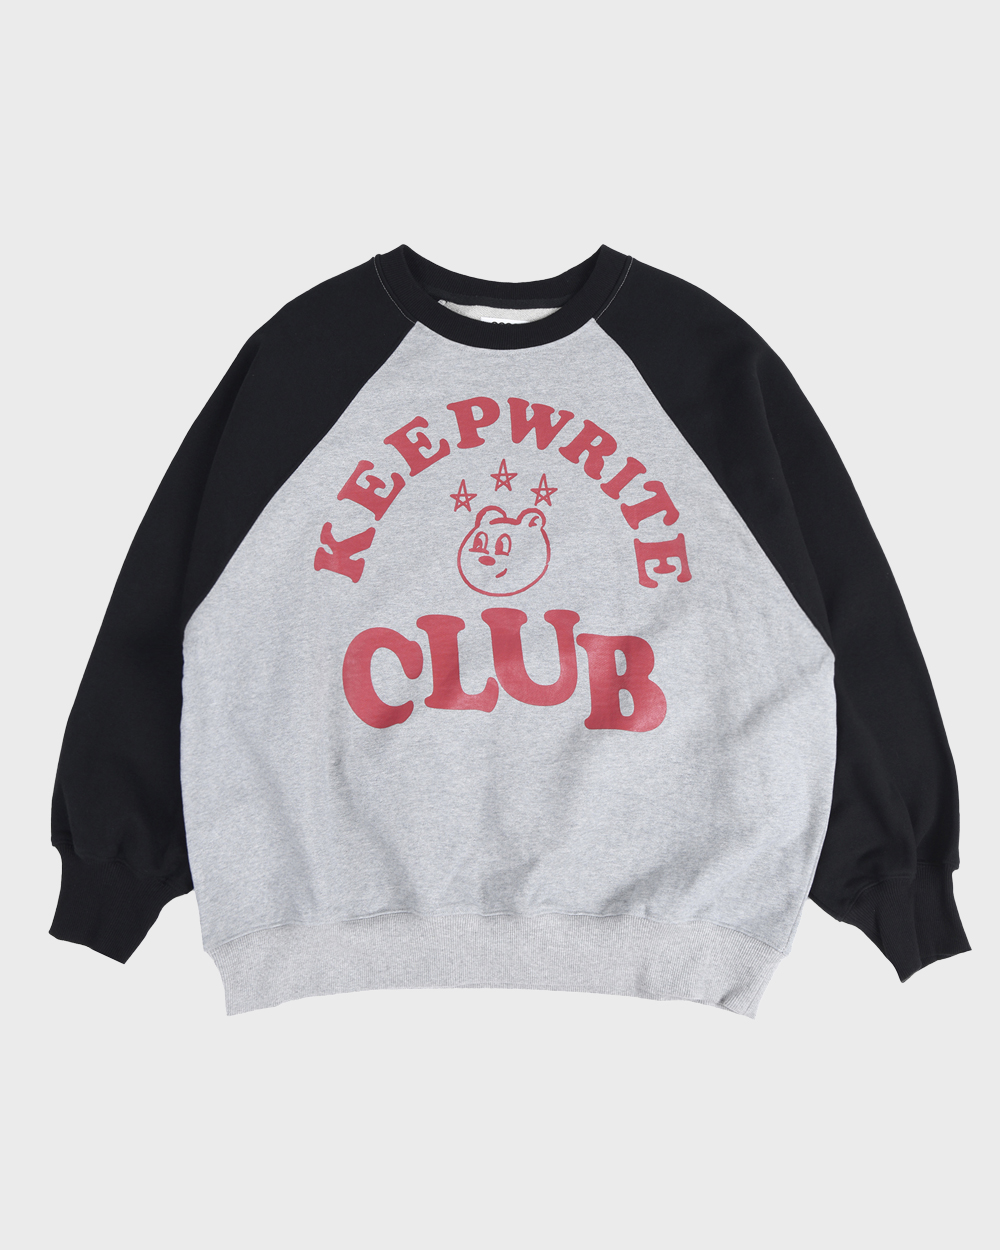 Keep Writing Club Raglan Sweatshirts (Black)